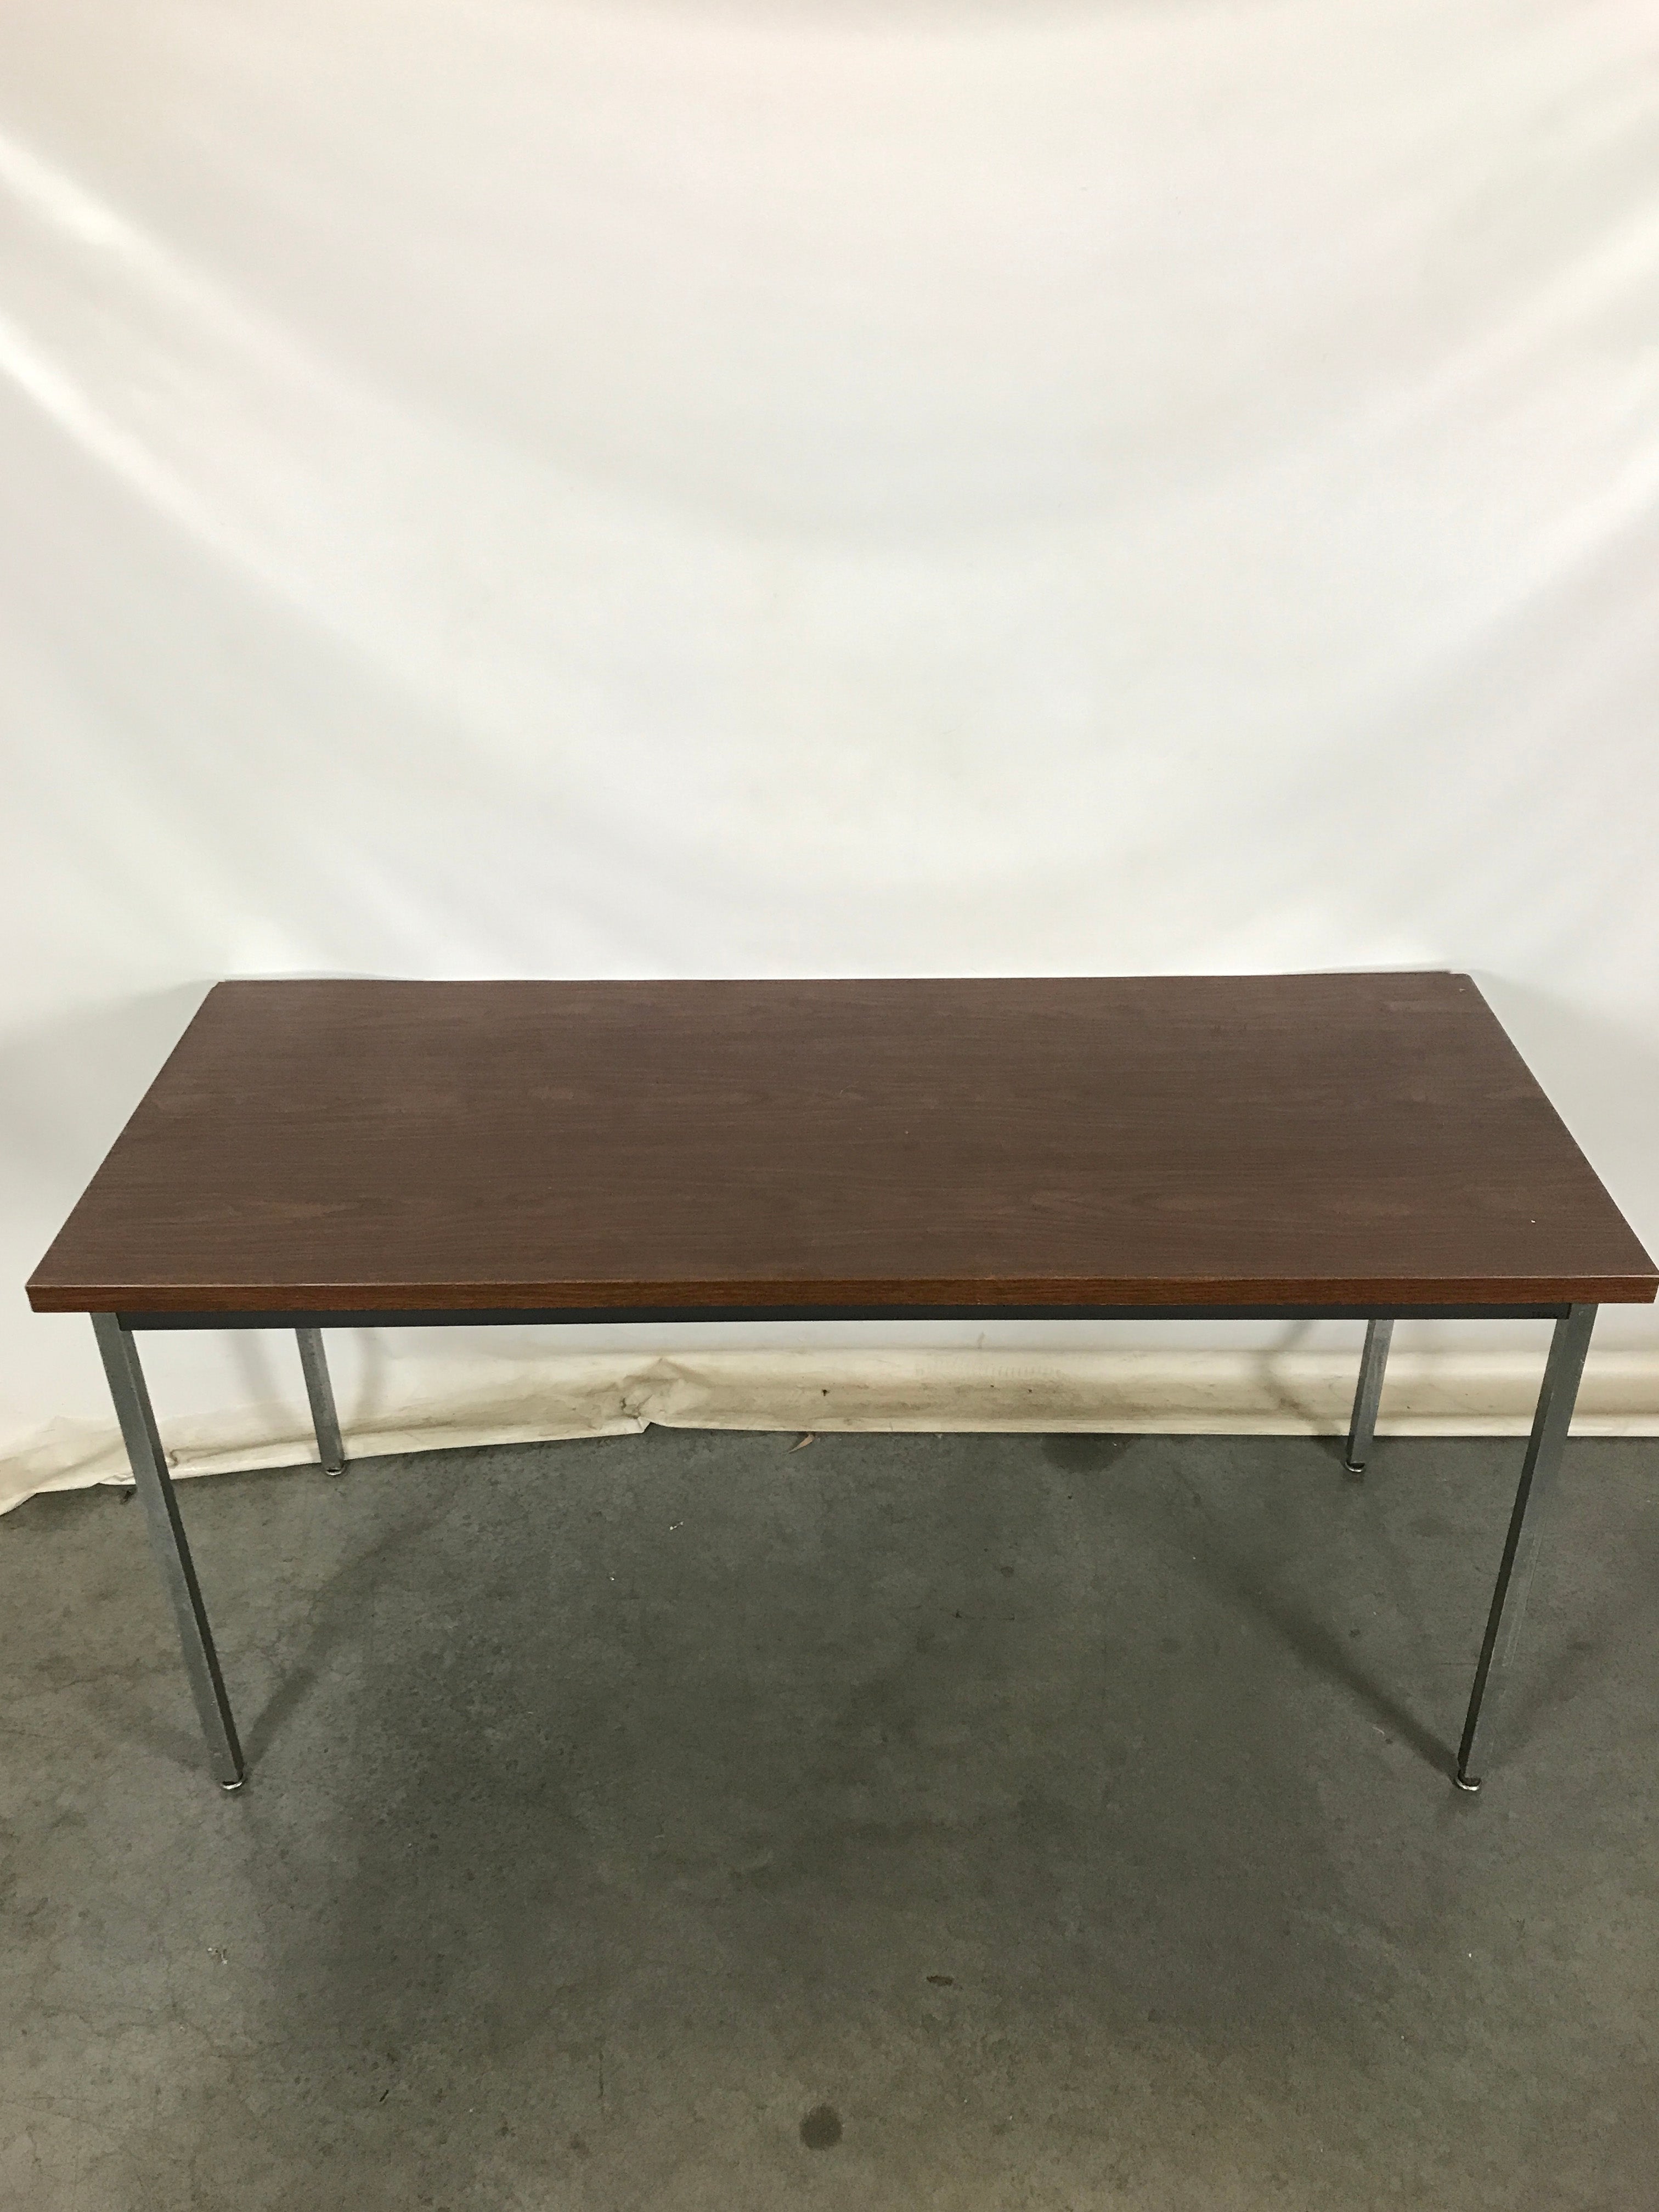 Steelcase Multipurpose Table